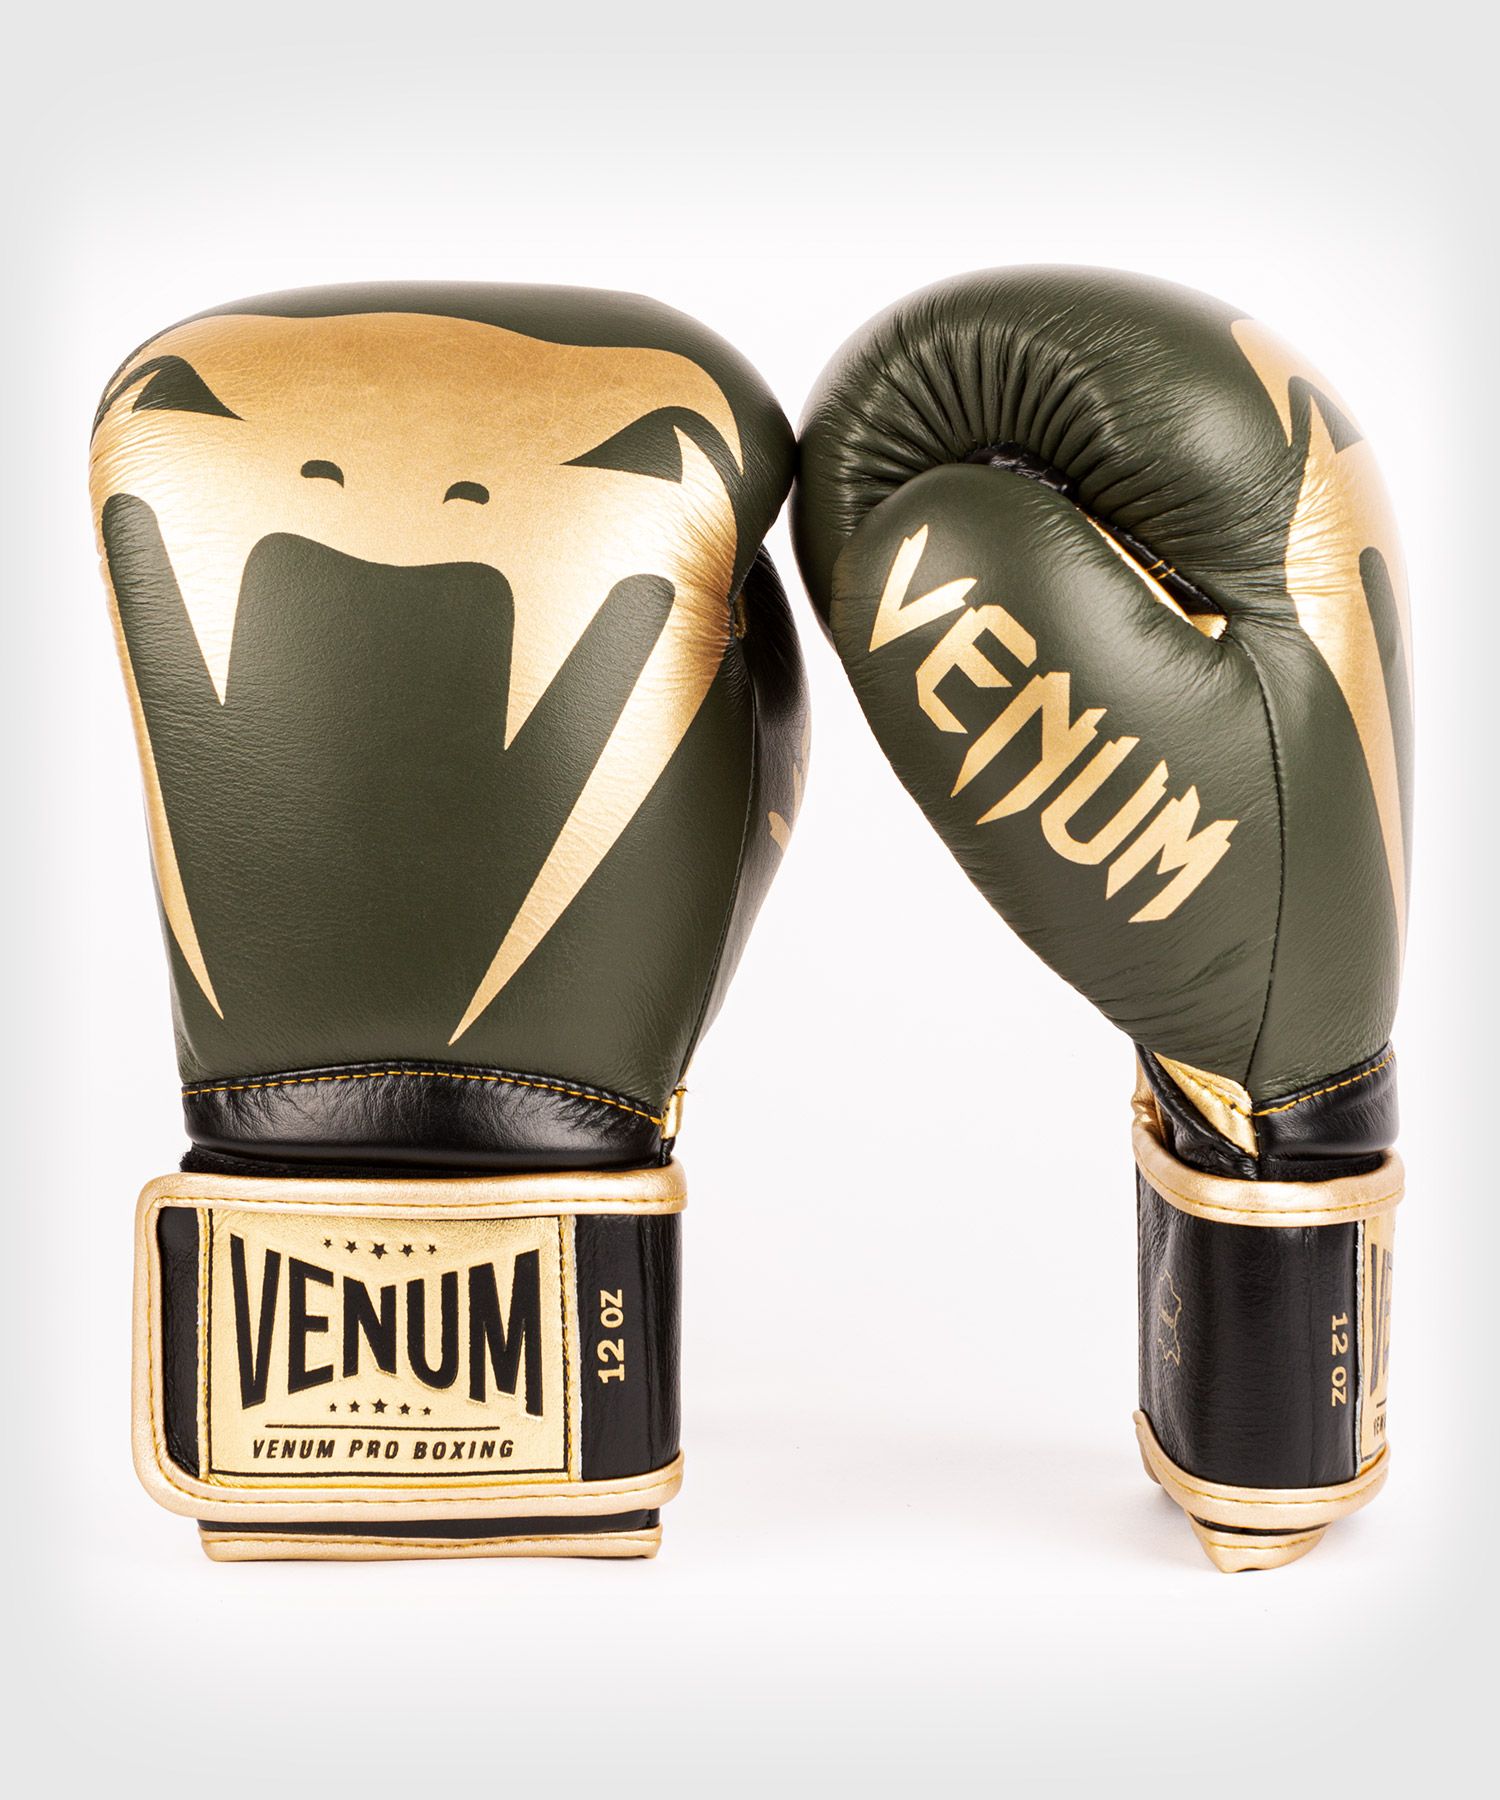 Gants de boxe pro Venum Giant 2.0 - Velcro - Kaki/Or